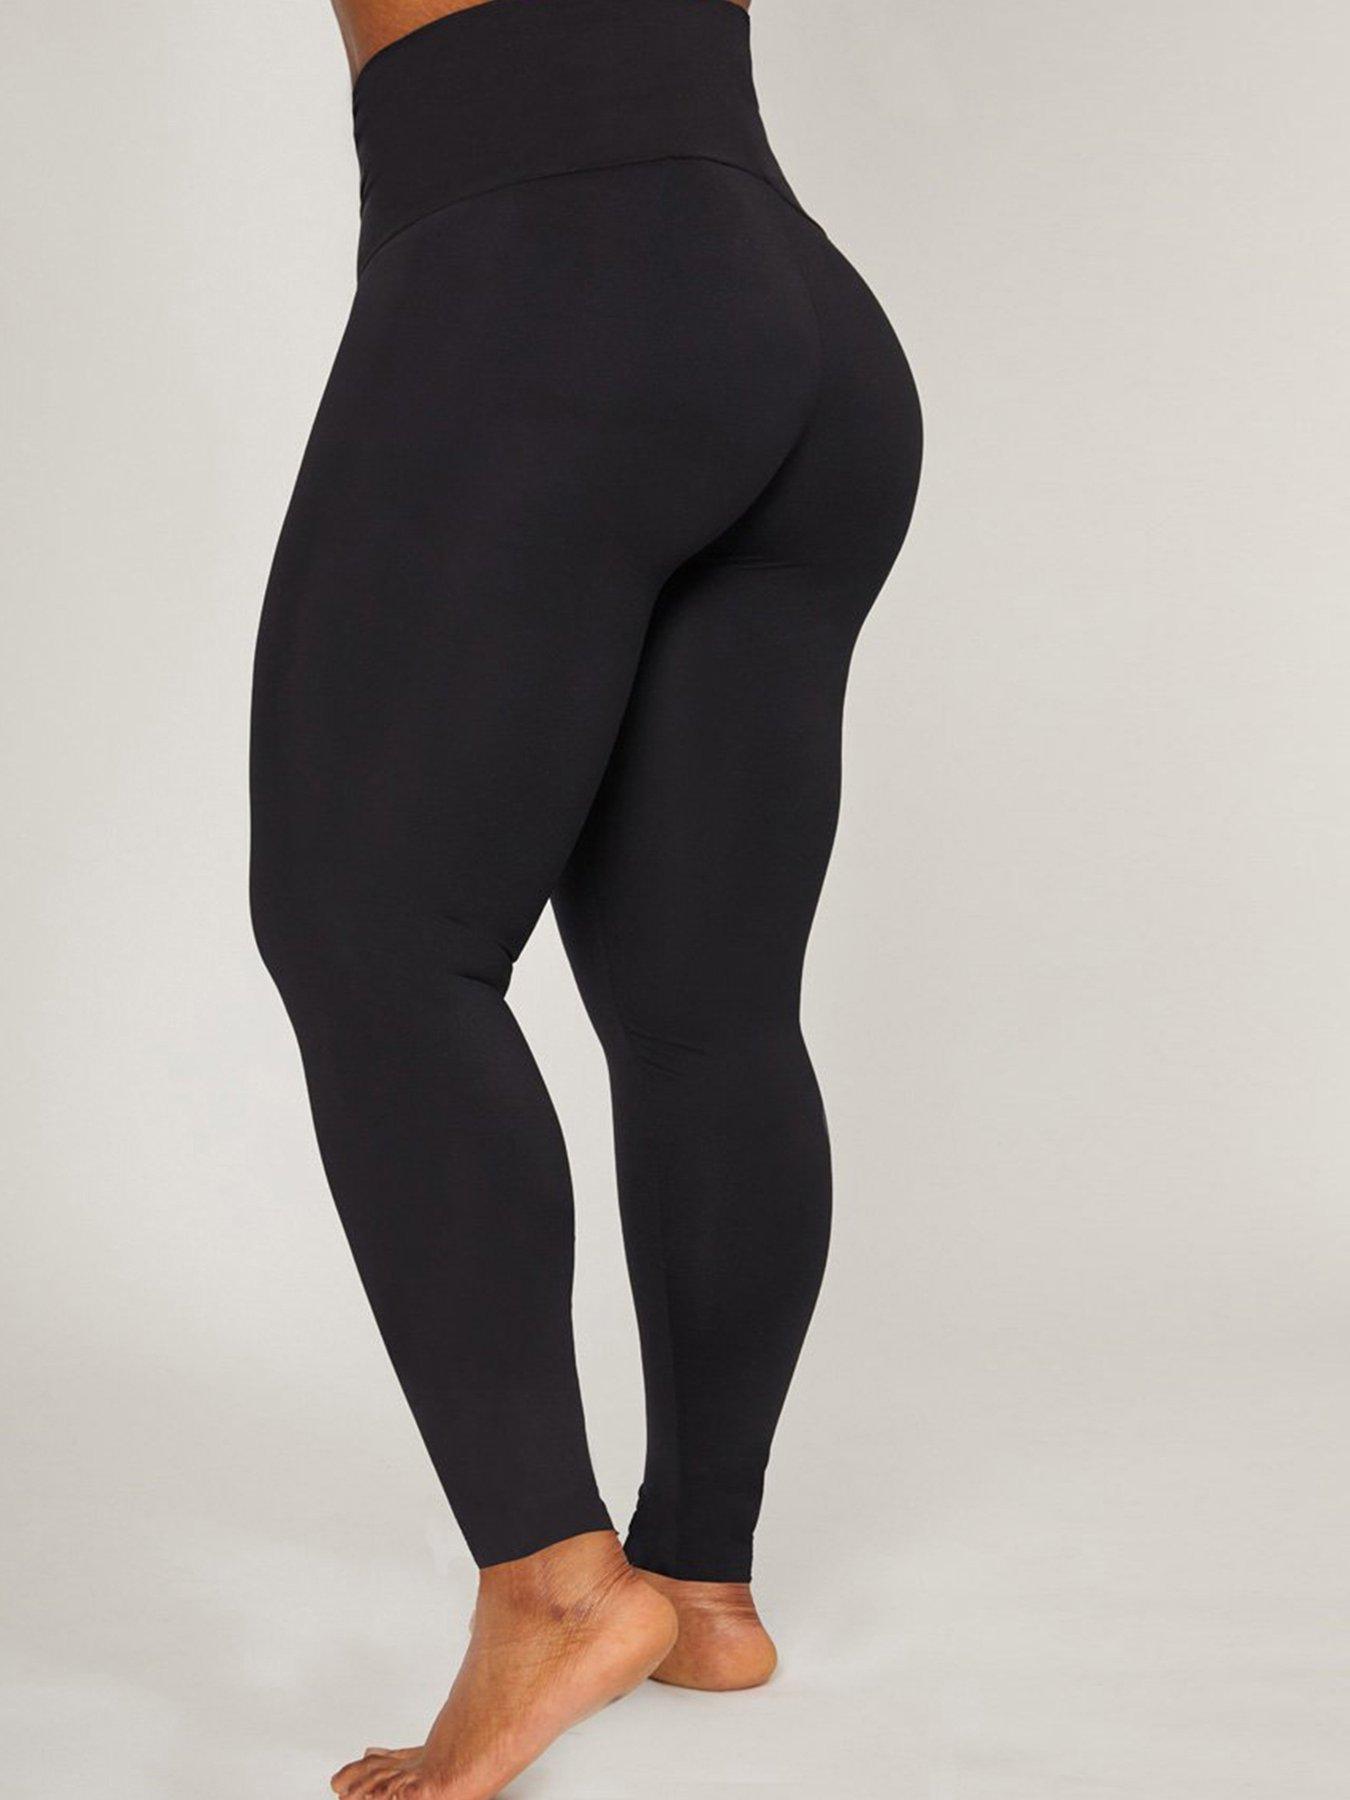 Yoga Basic Plus Size Compression Tummy Control Workout Leggings, Yoga Pants